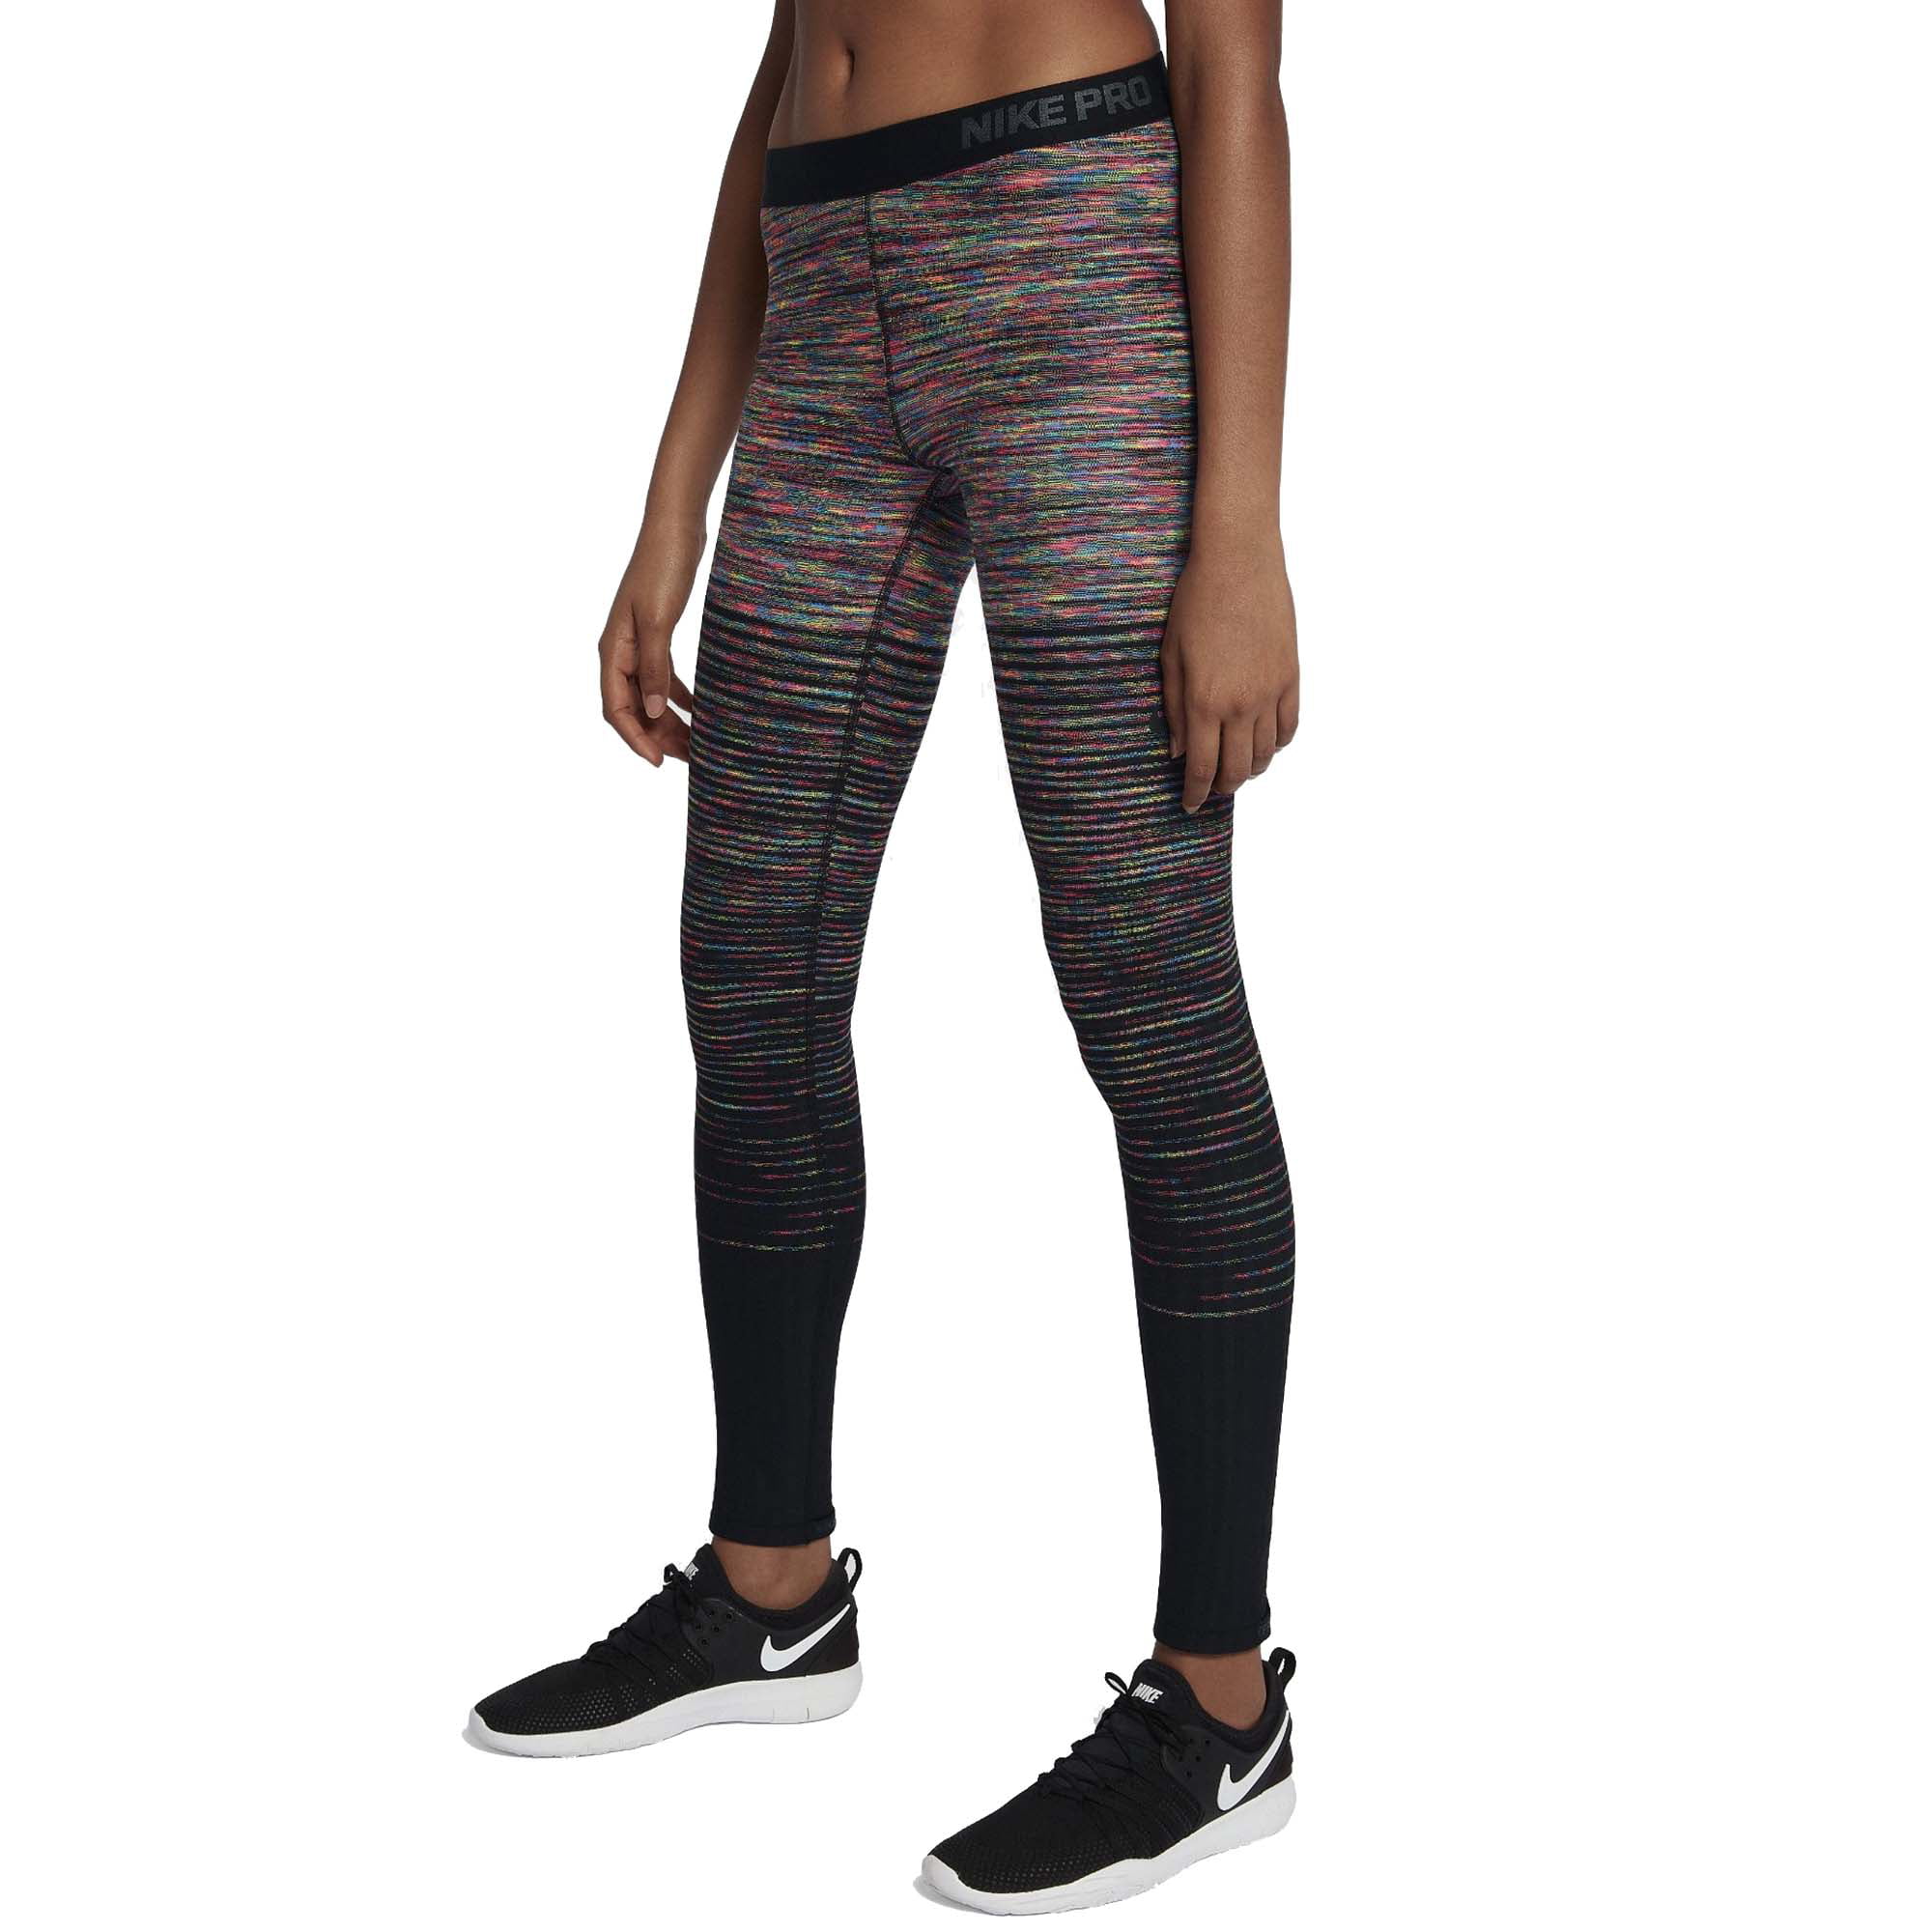 Nike Women's Hyperwarm Brushed Training Tights (Black/Multi